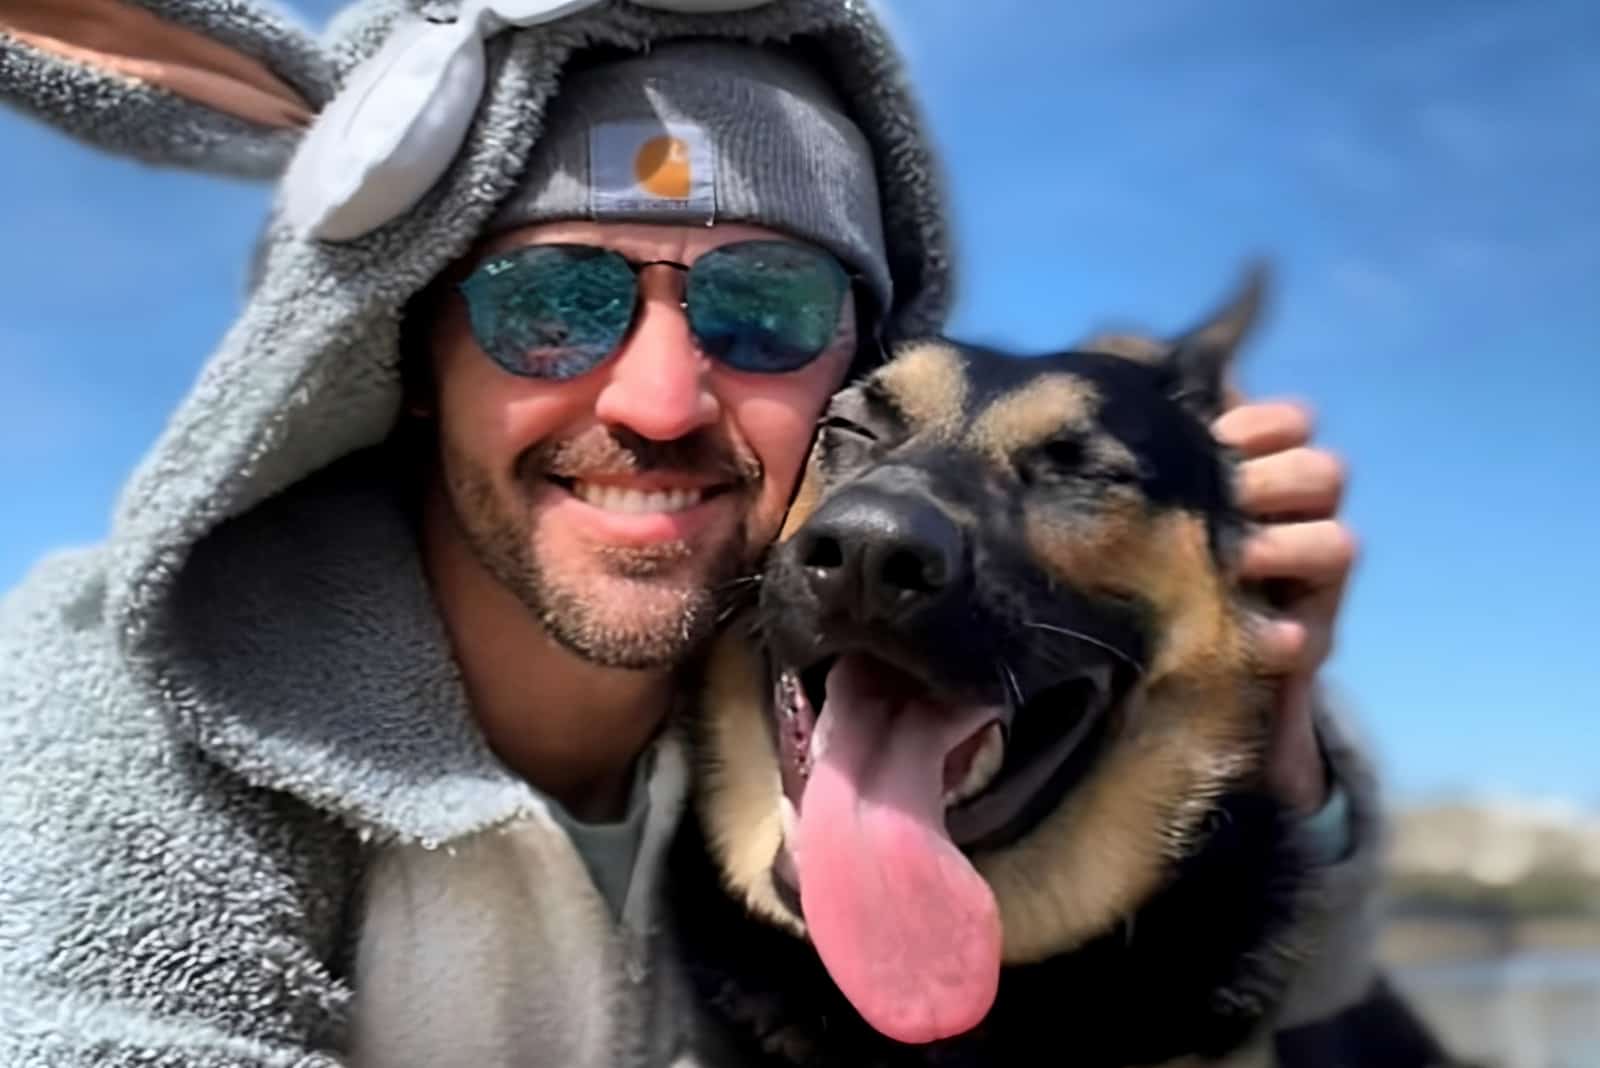 happy man with dog